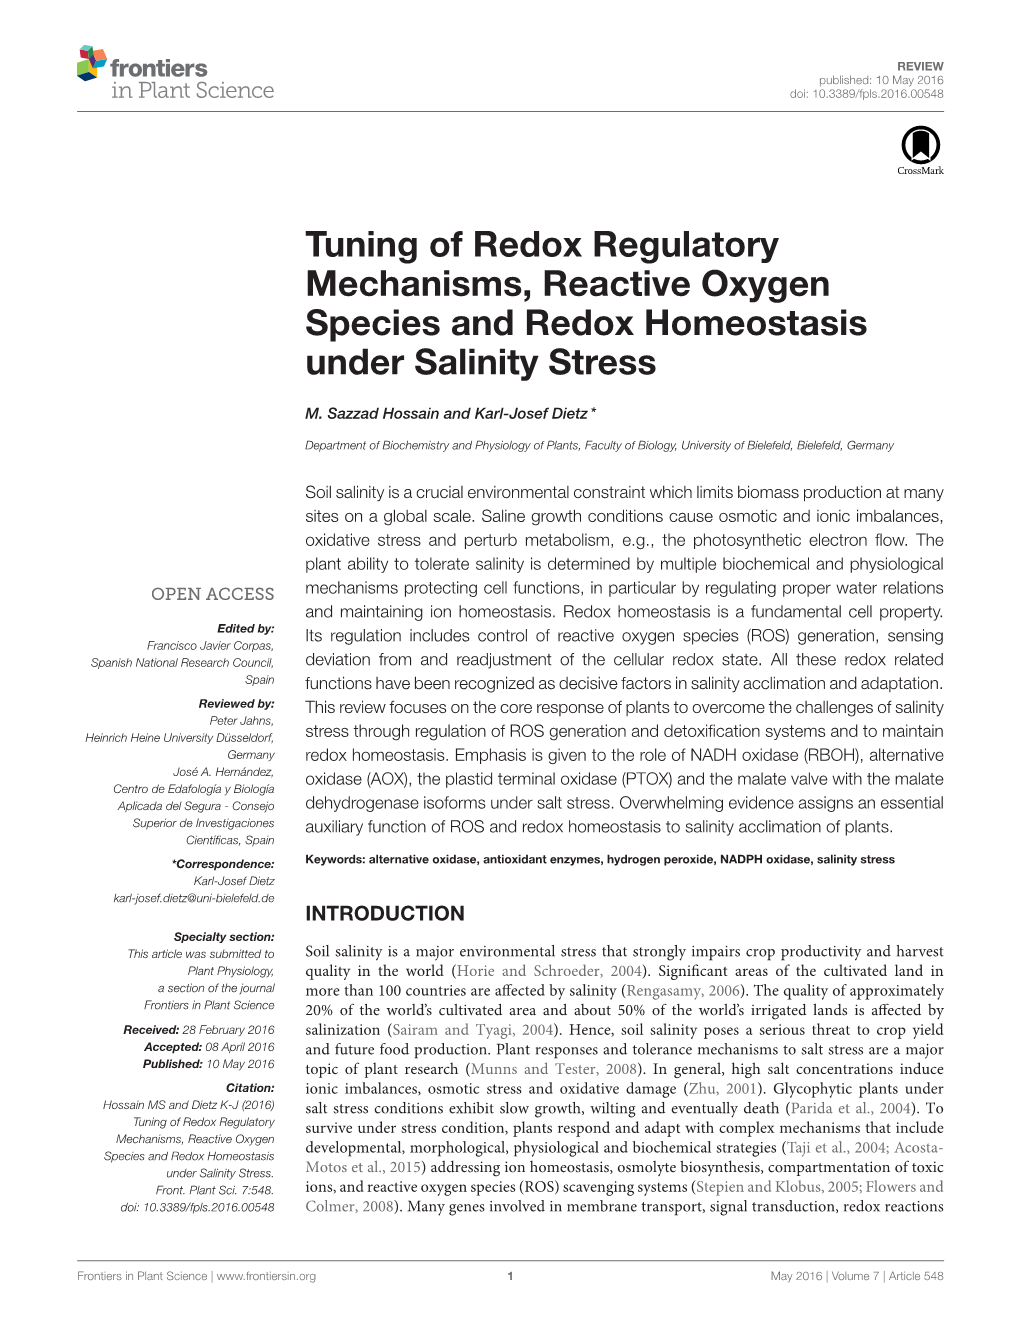 Tuning of Redox Regulatory Mechanisms, Reactive Oxygen Species and Redox Homeostasis Under Salinity Stress